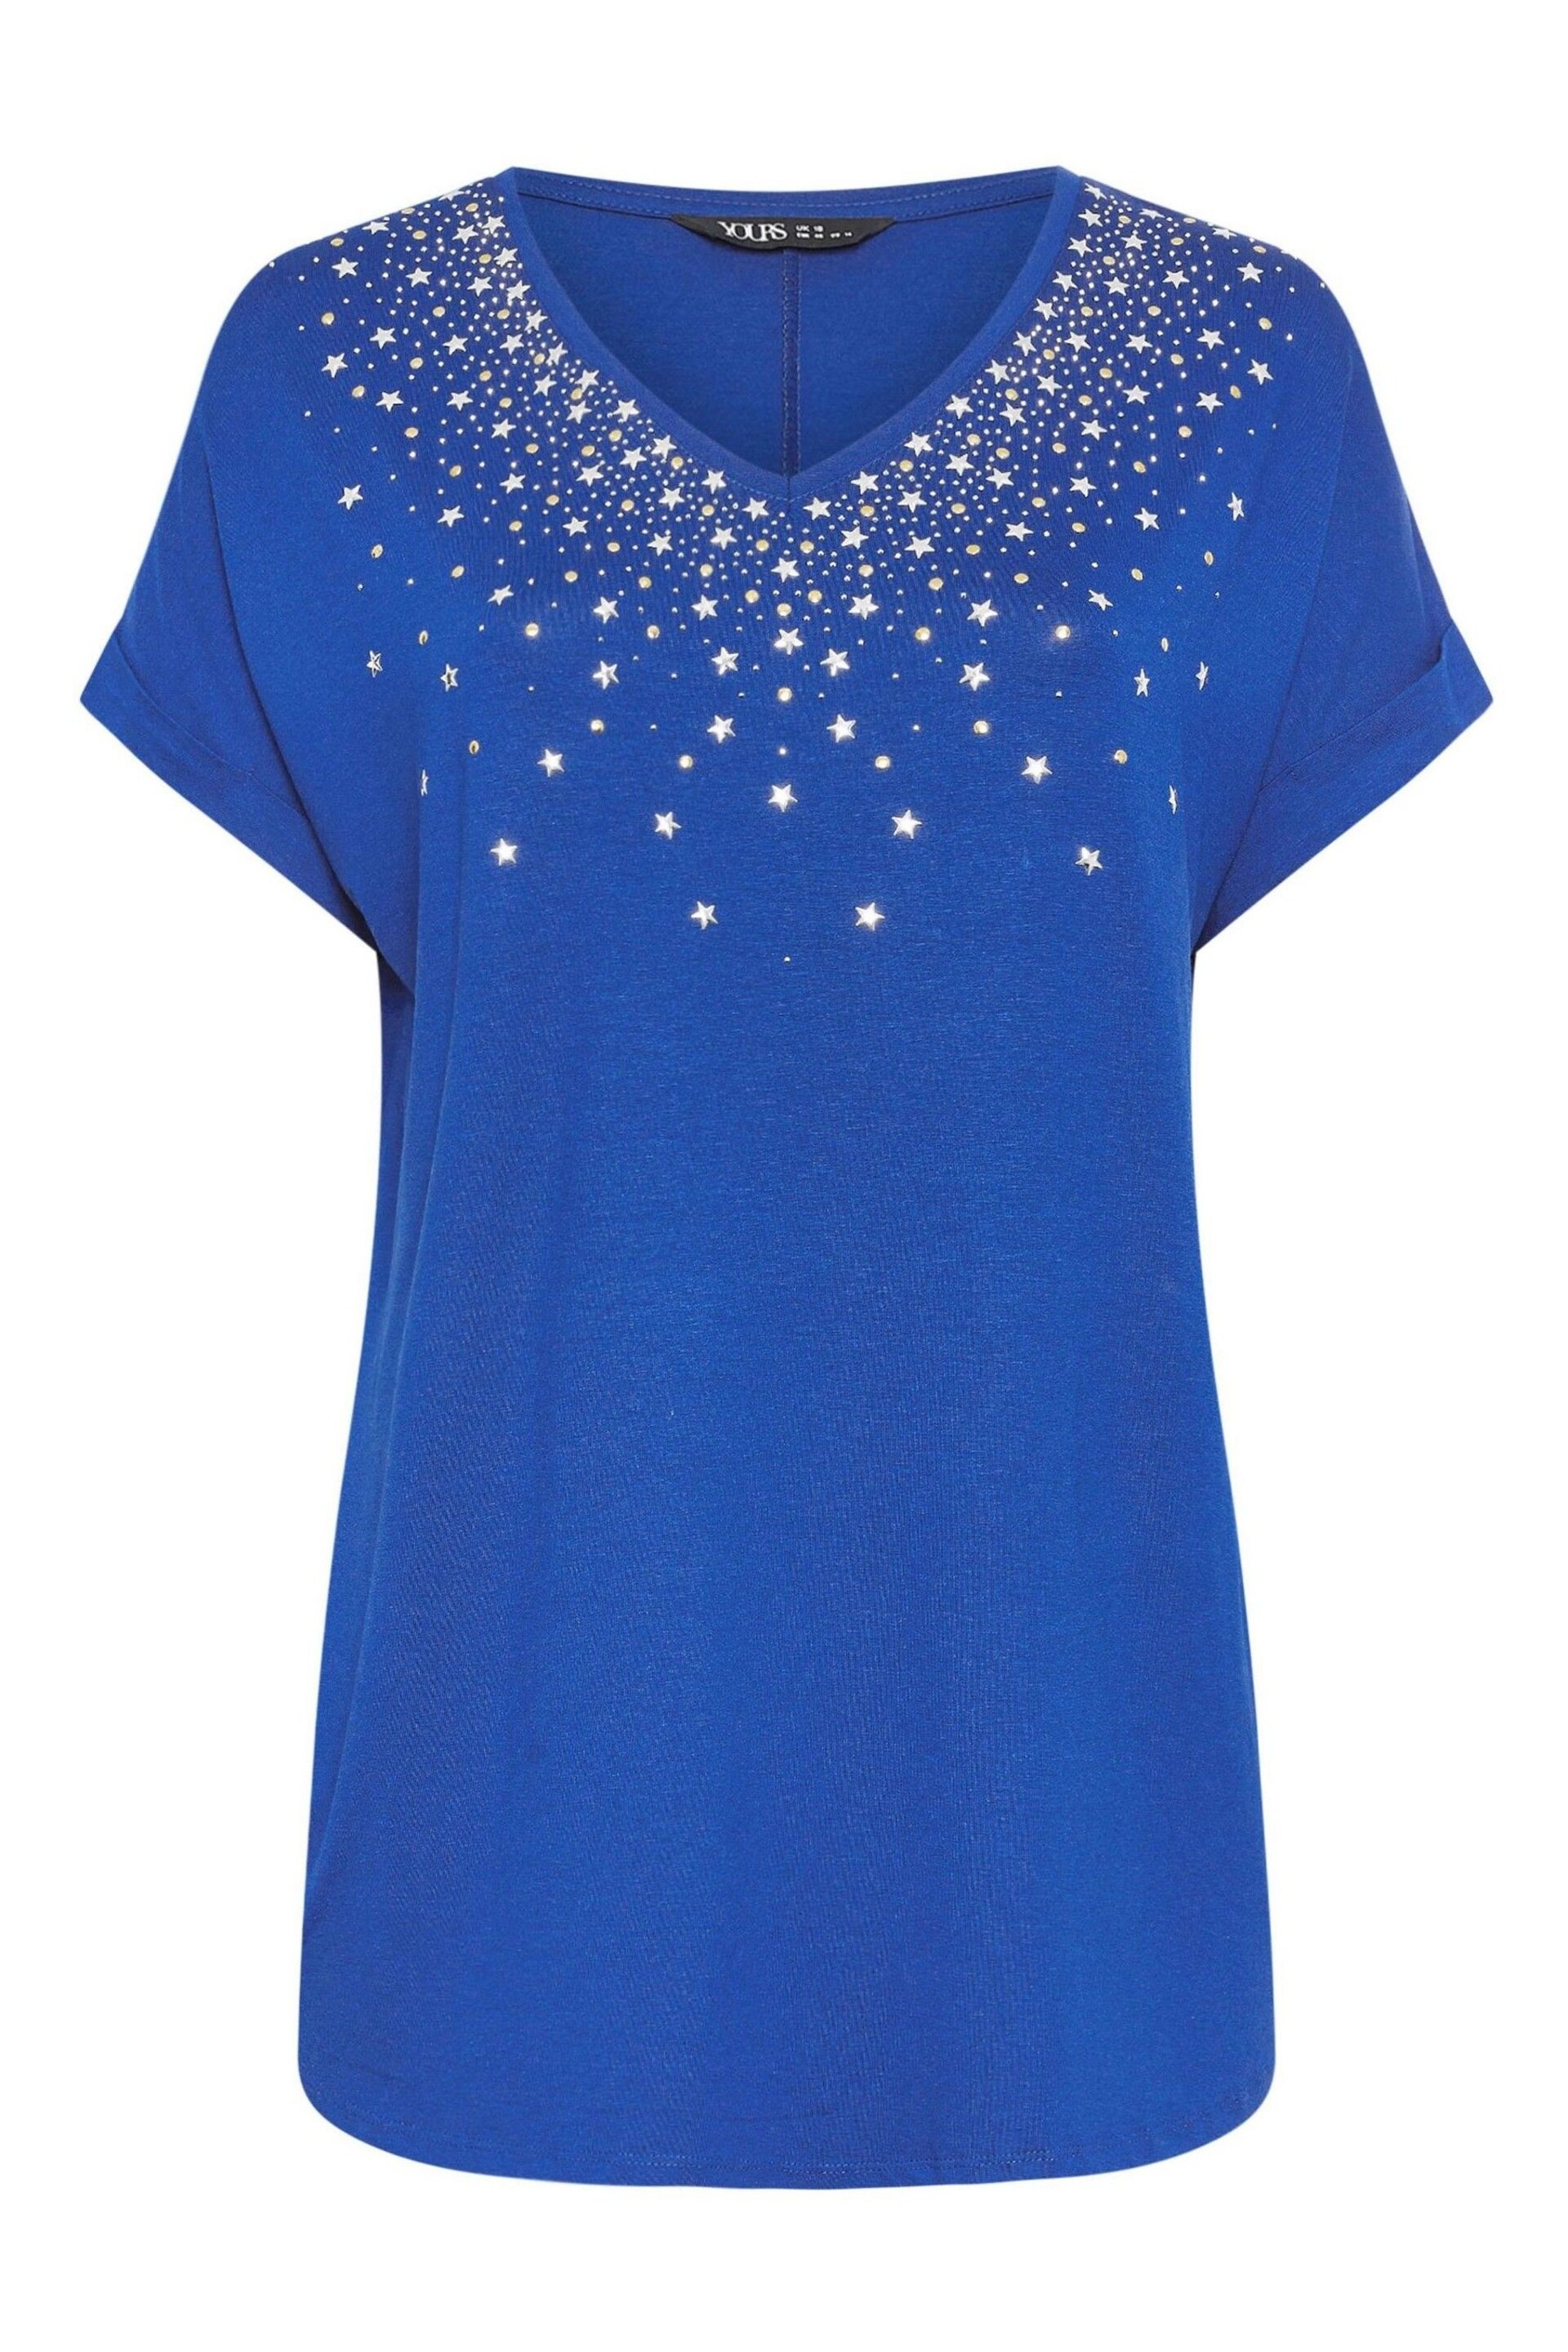 Yours Curve Navy Blue Sequin Star Embellished T-Shirt - Image 4 of 4